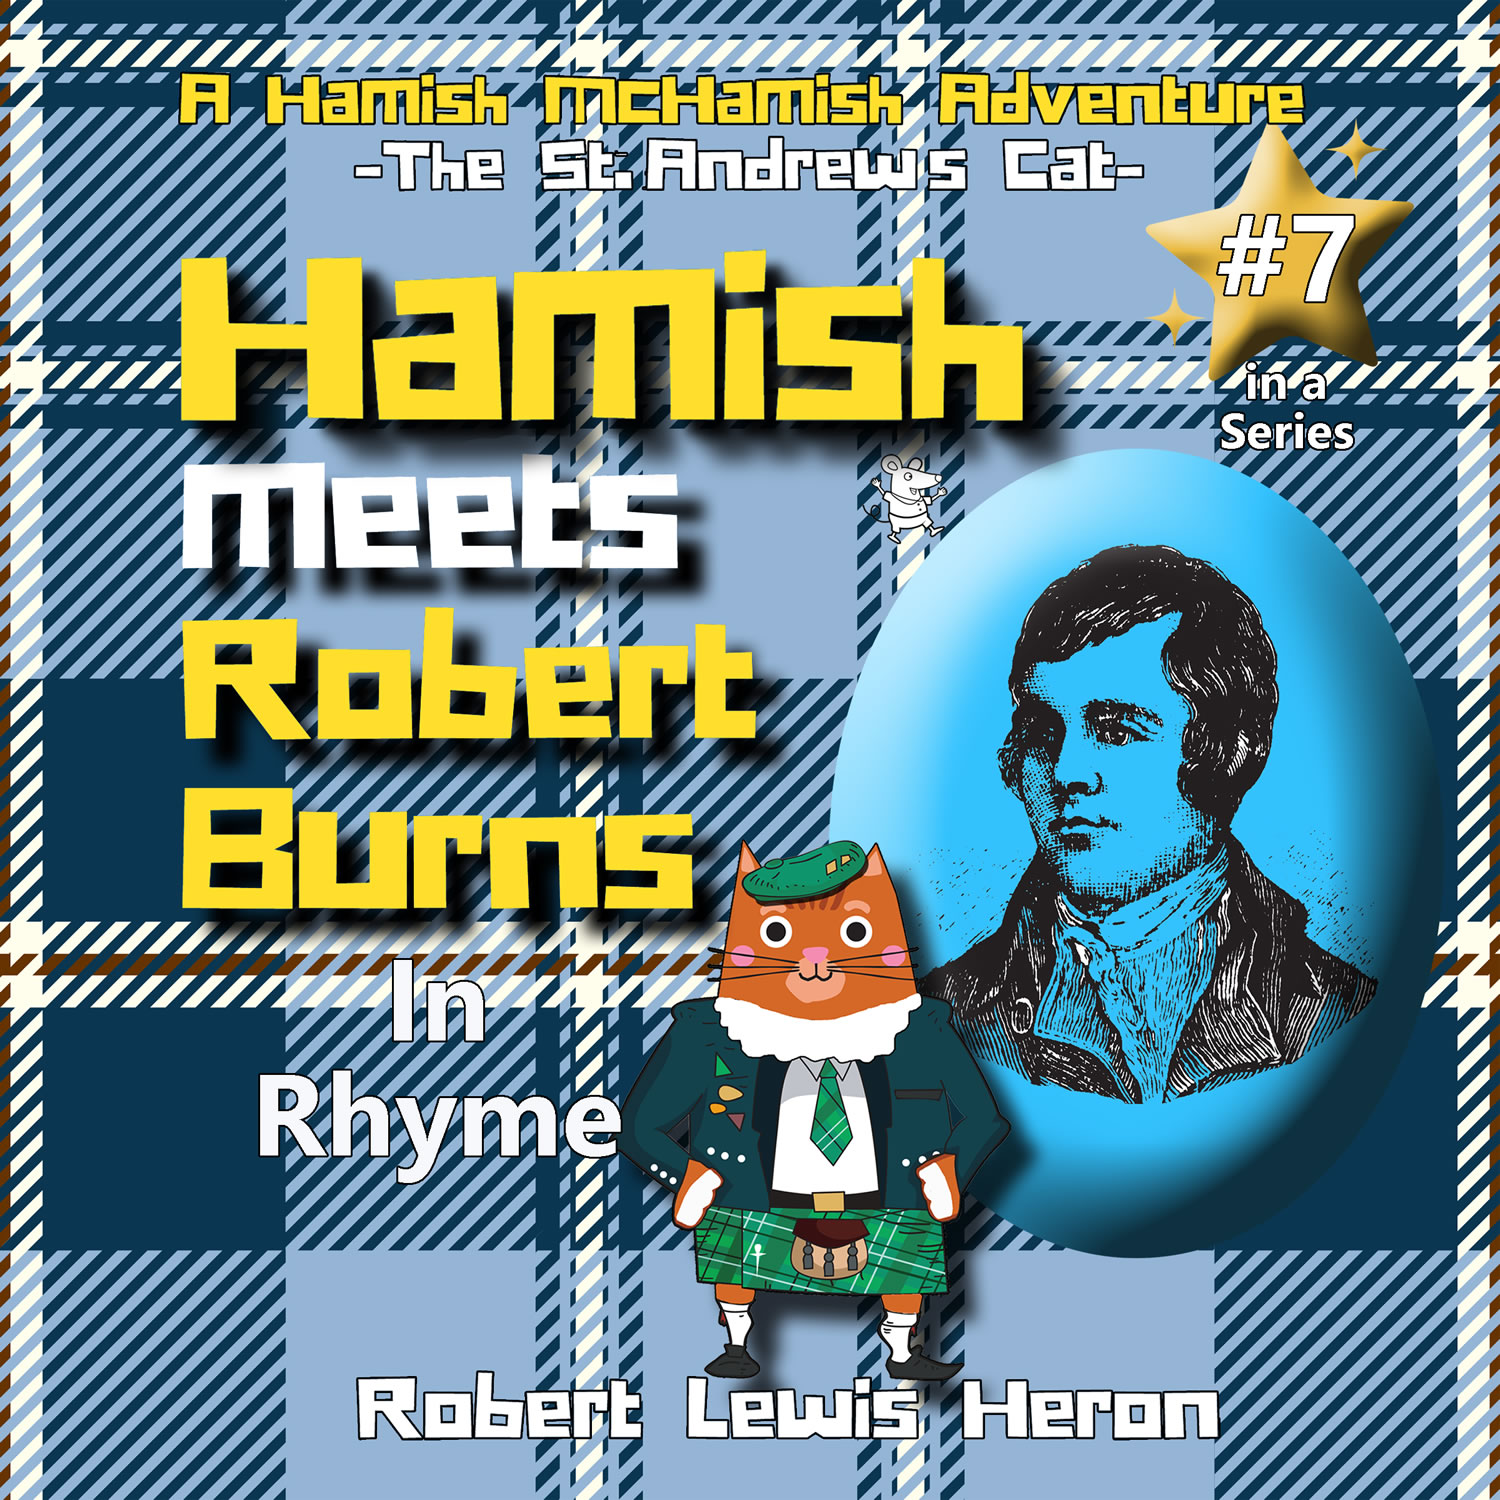 Book 7 Hamish meets Robert Burns